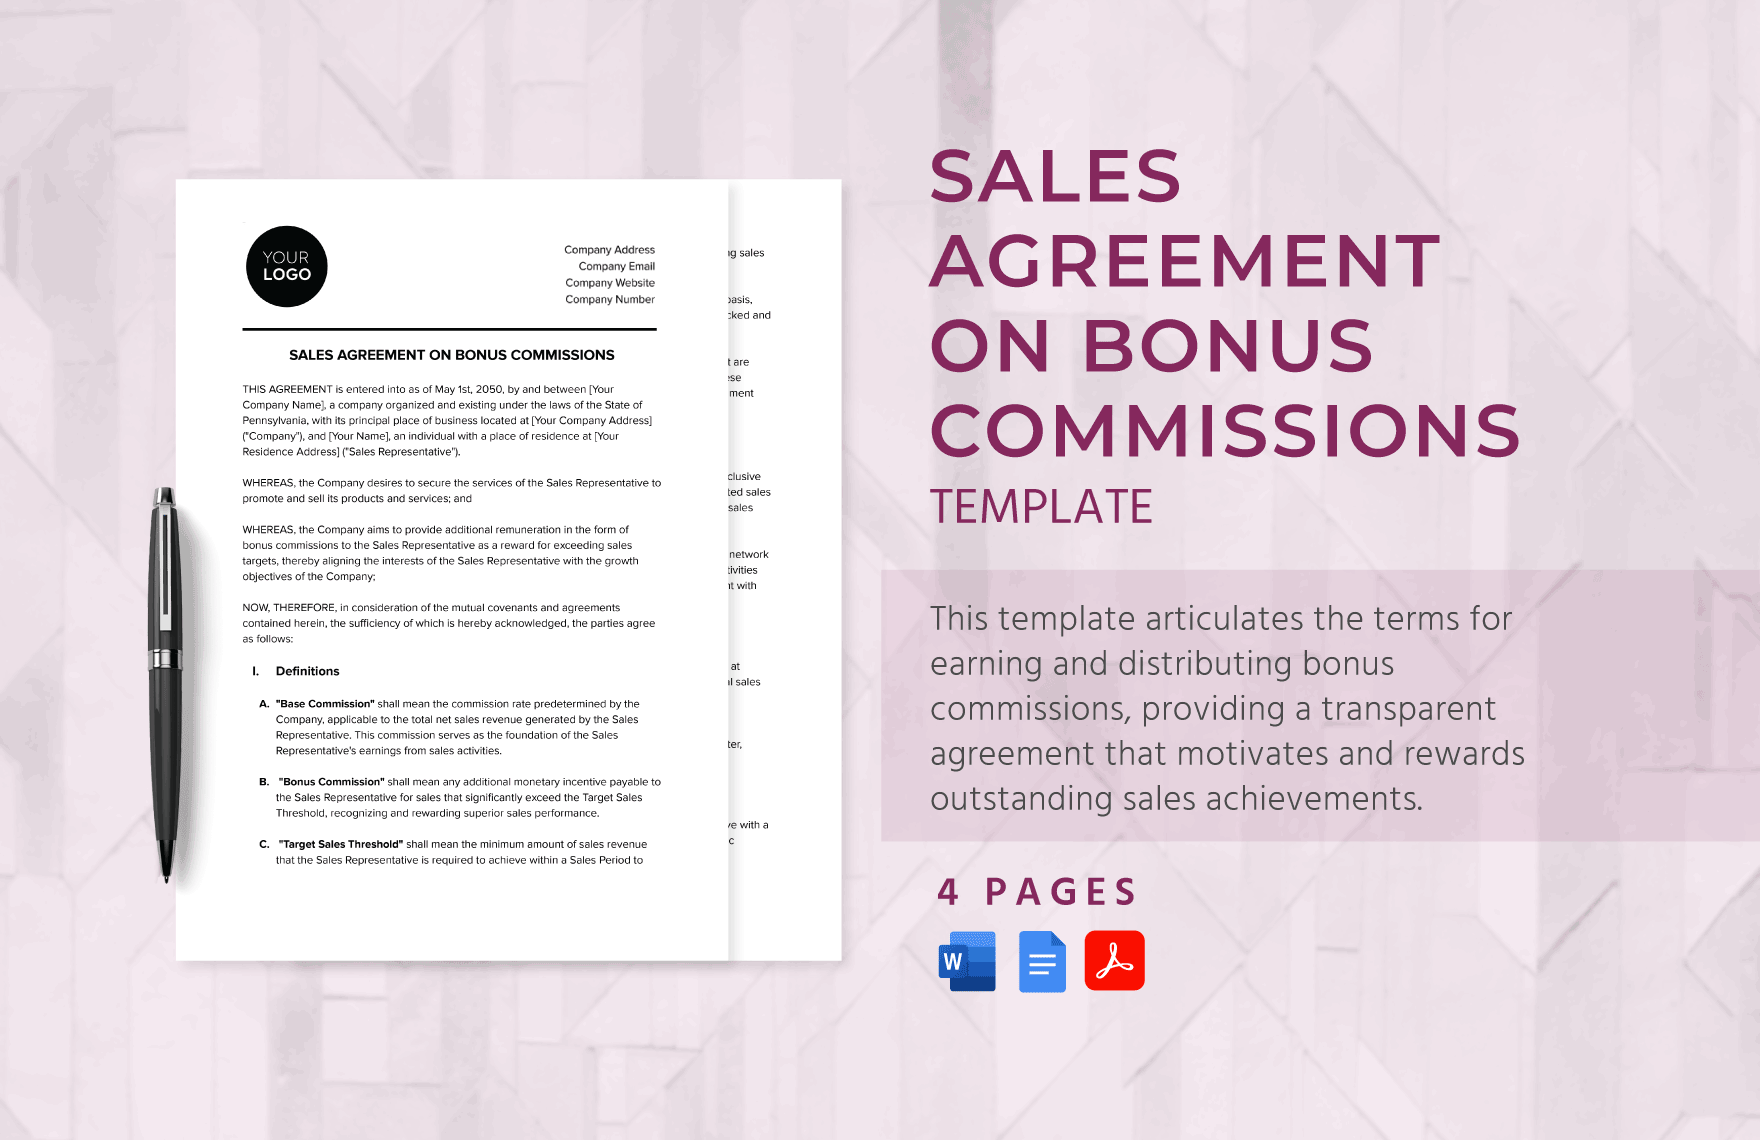 Sales Agreement on Bonus Commissions Template in Word, Google Docs, PDF